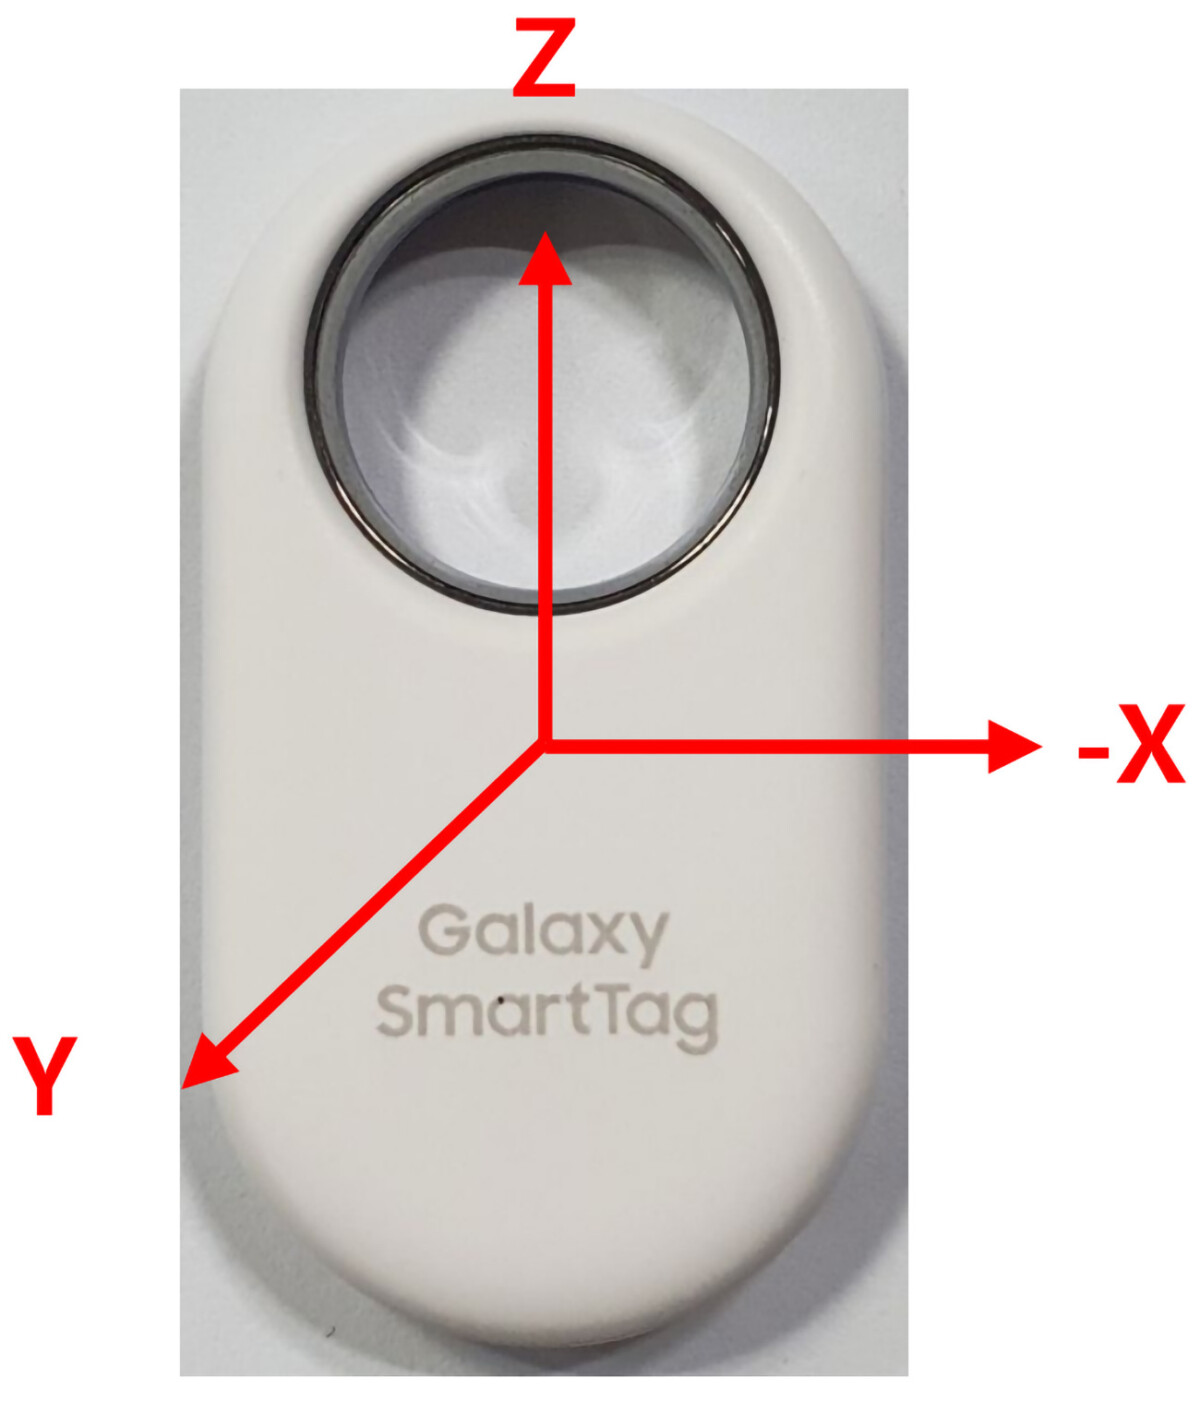 The Samsung SmartTag 2